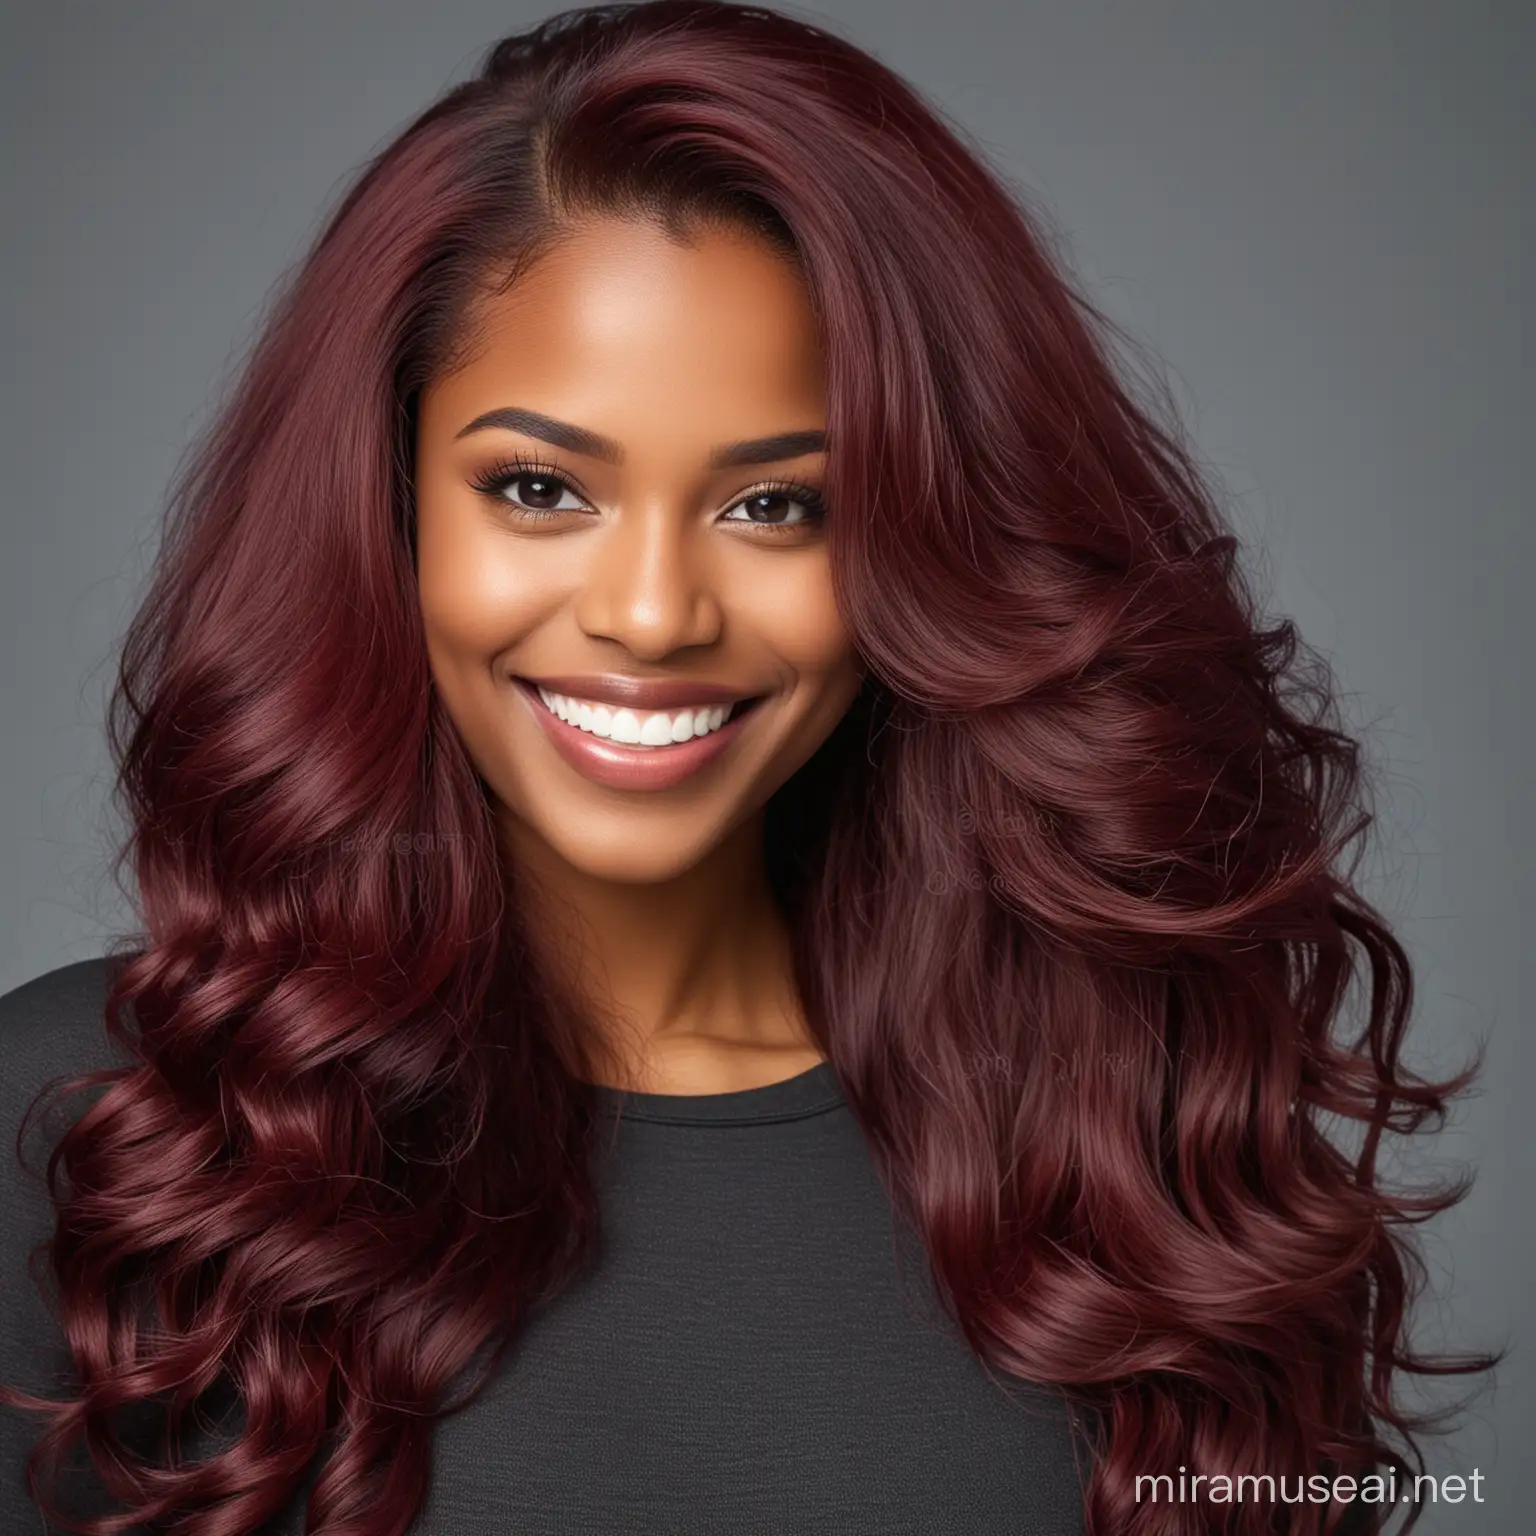 Luxurious Black Girl Smiling with Elegant Burgundy Hair Stock Image